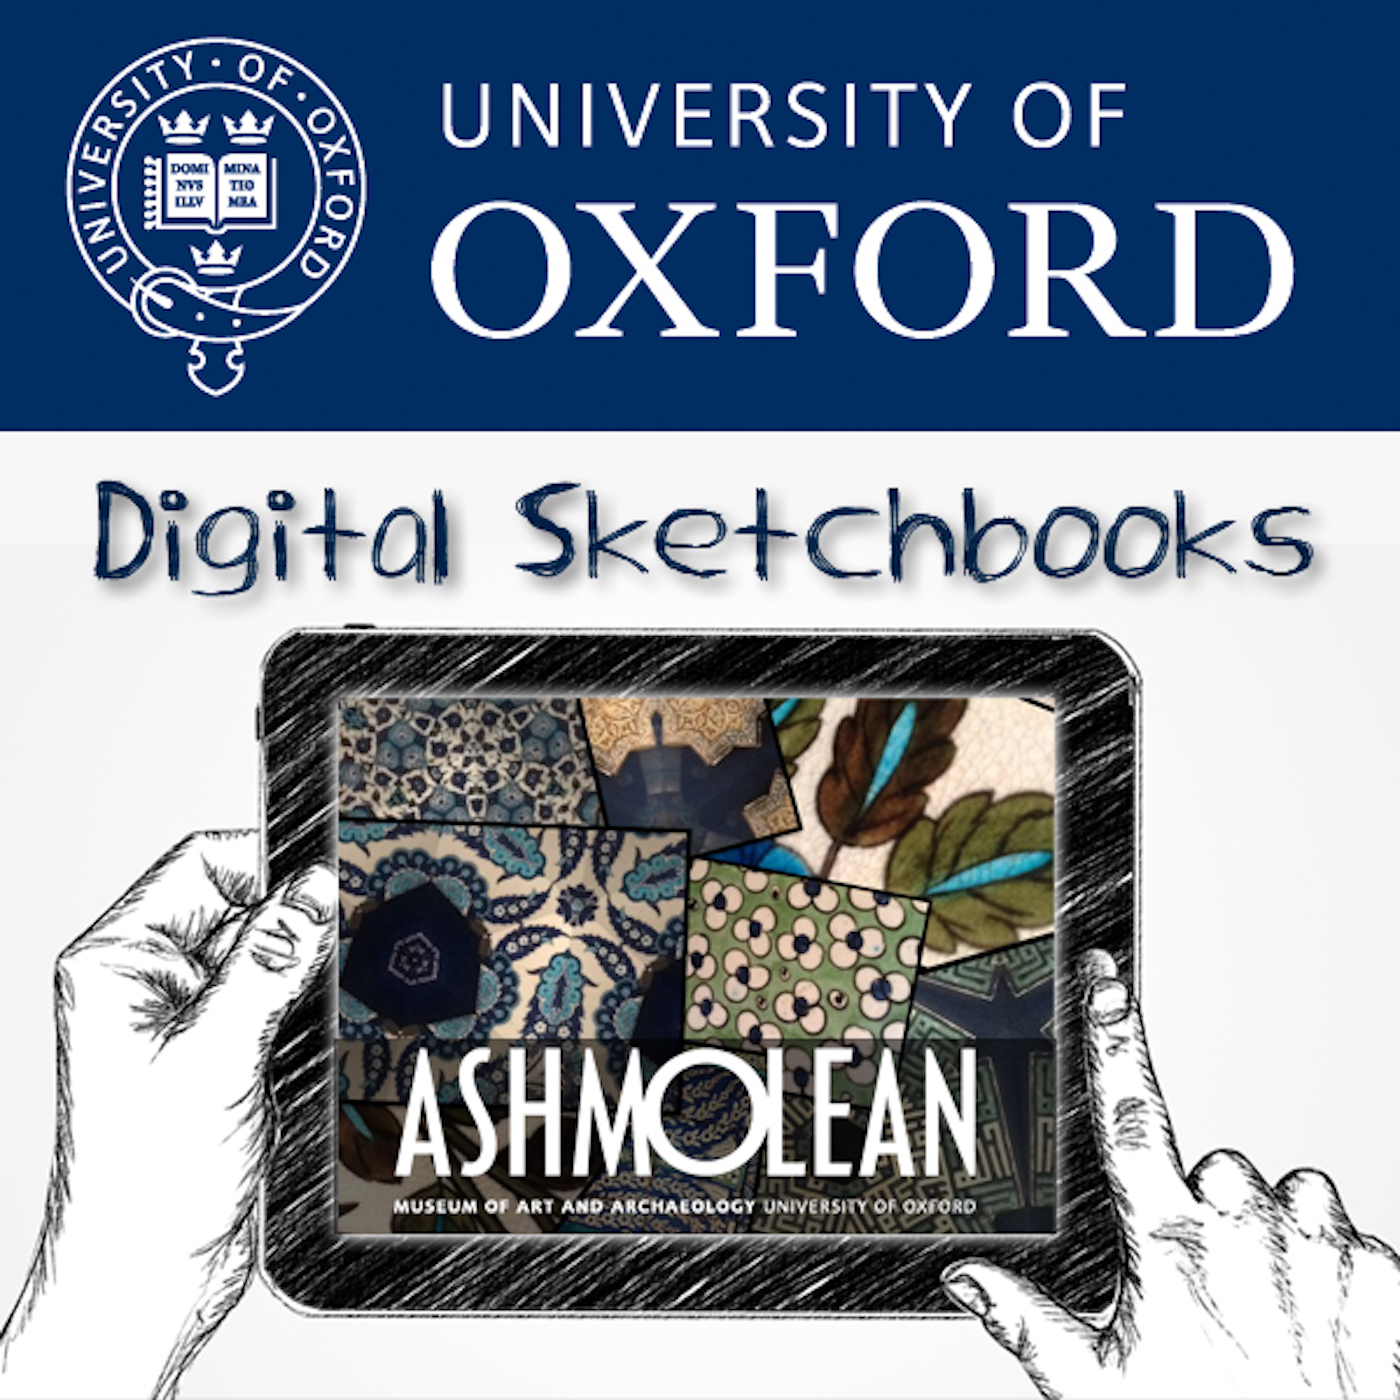 Digital Sketchbooks: Using tablets to support a museum art visit